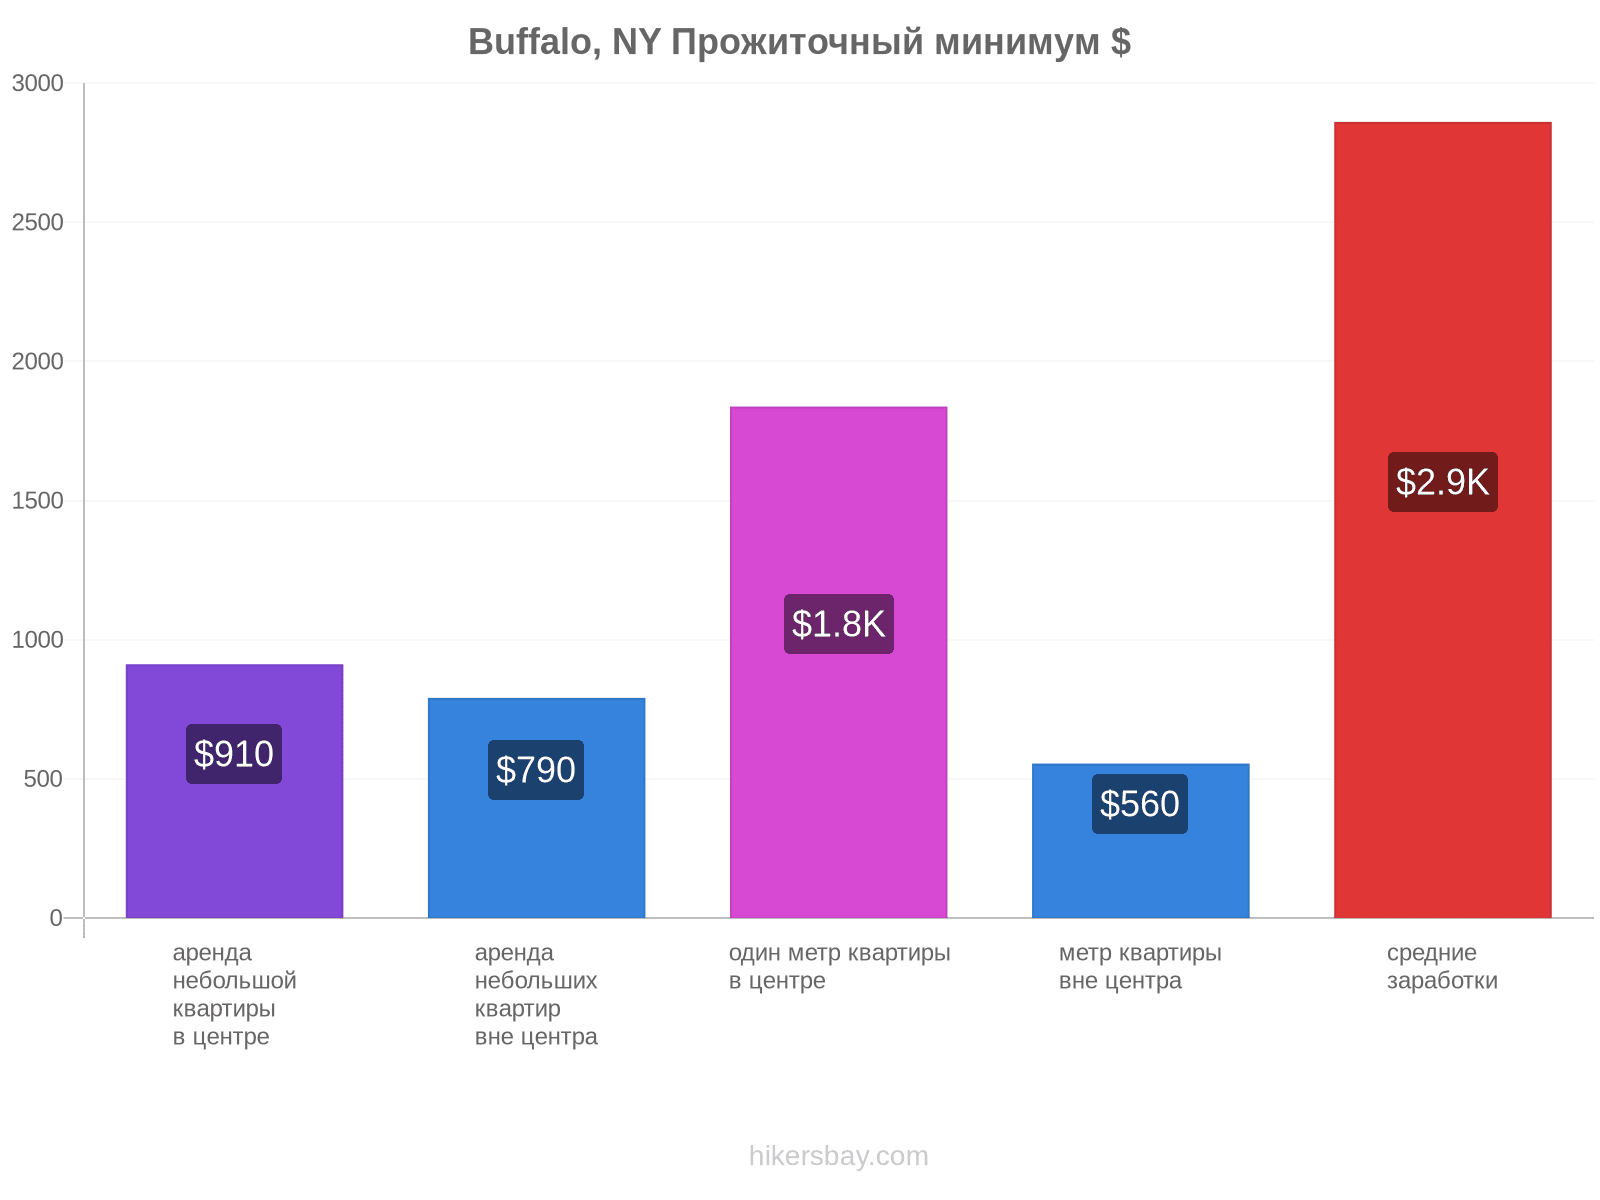 Buffalo, NY стоимость жизни hikersbay.com